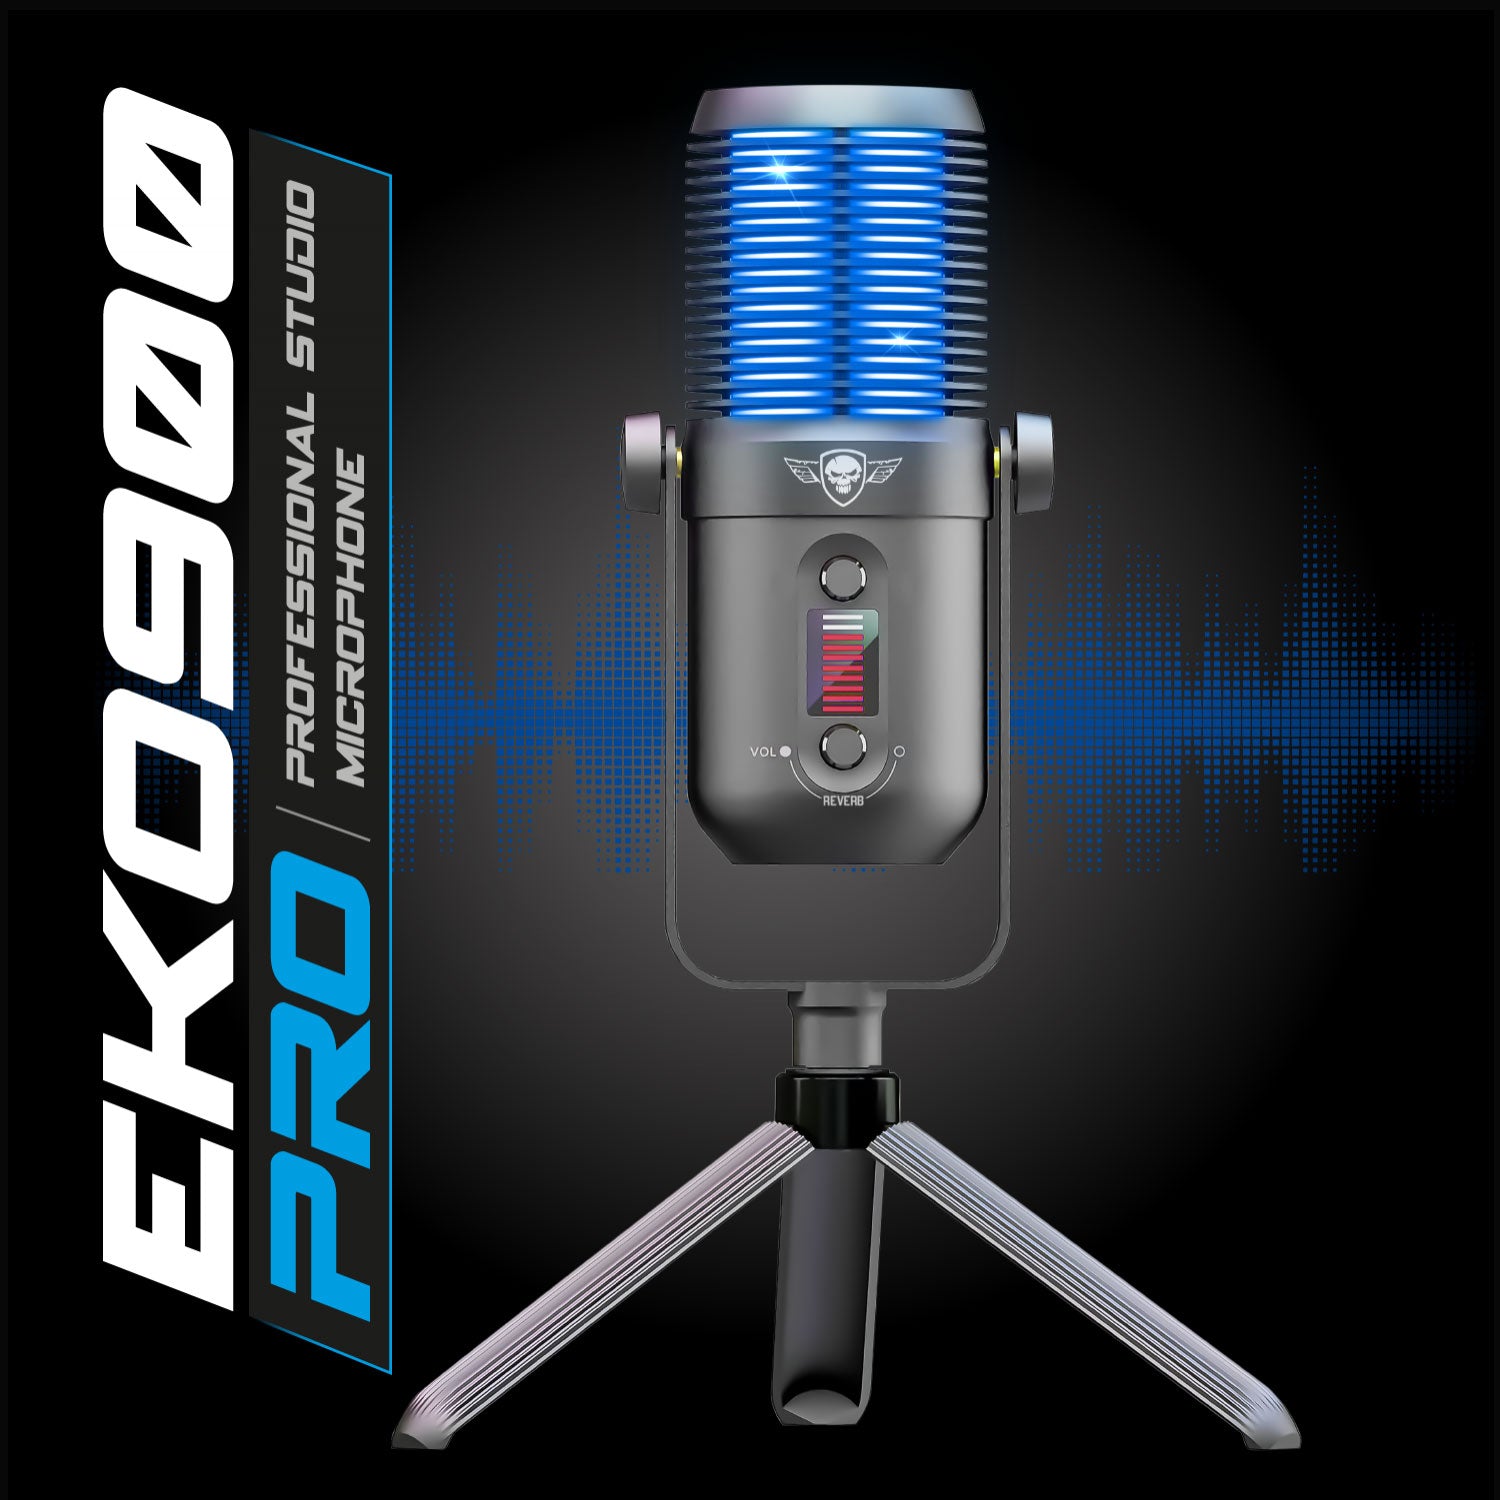 Spirit of Gamer - Microphone Gamer double directivité - Rétro-éclairage Bleu - EKO 900